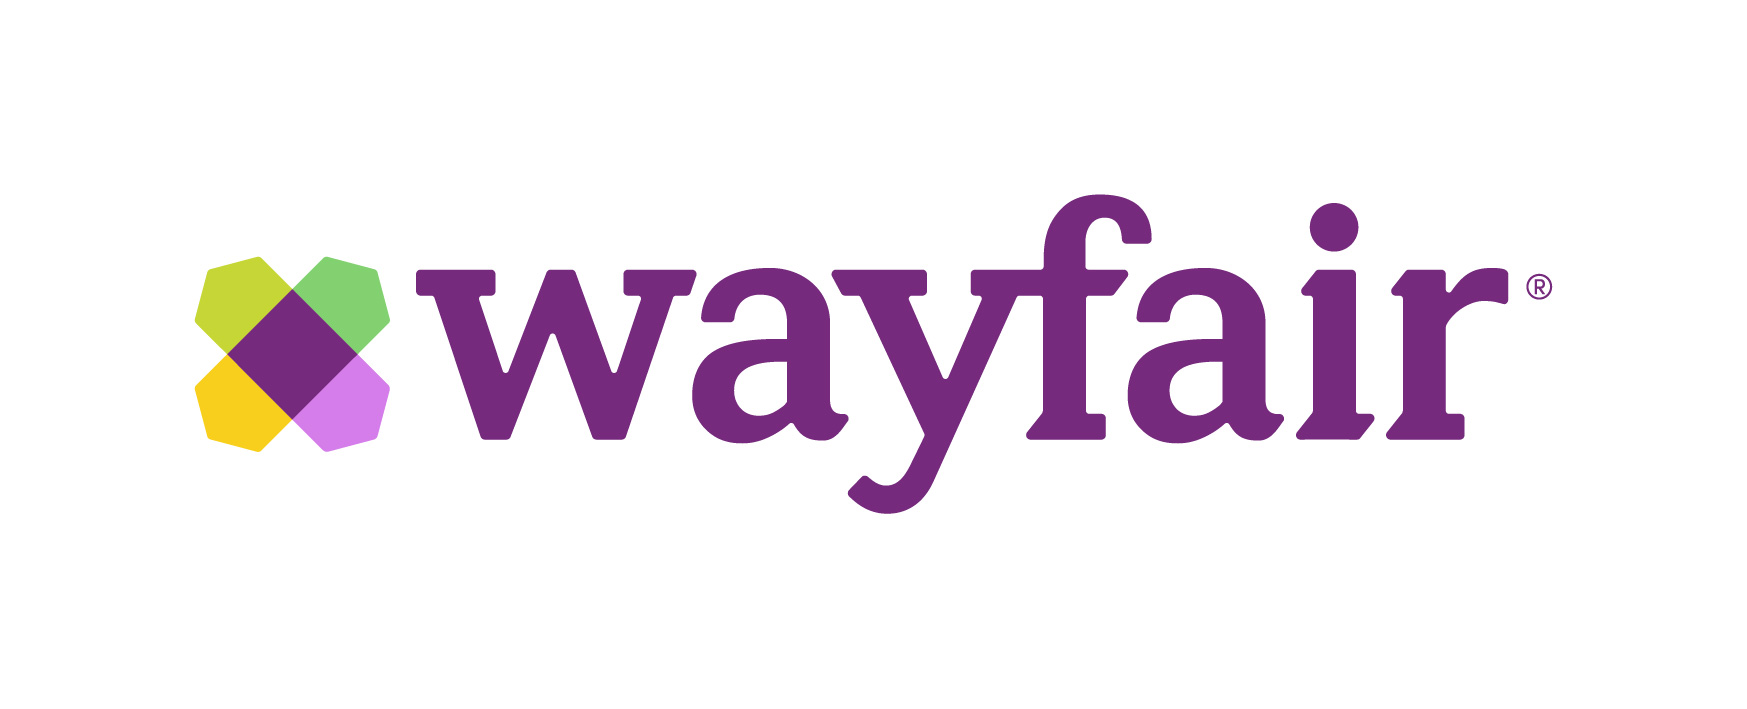 wayfair_logo2a.jpg